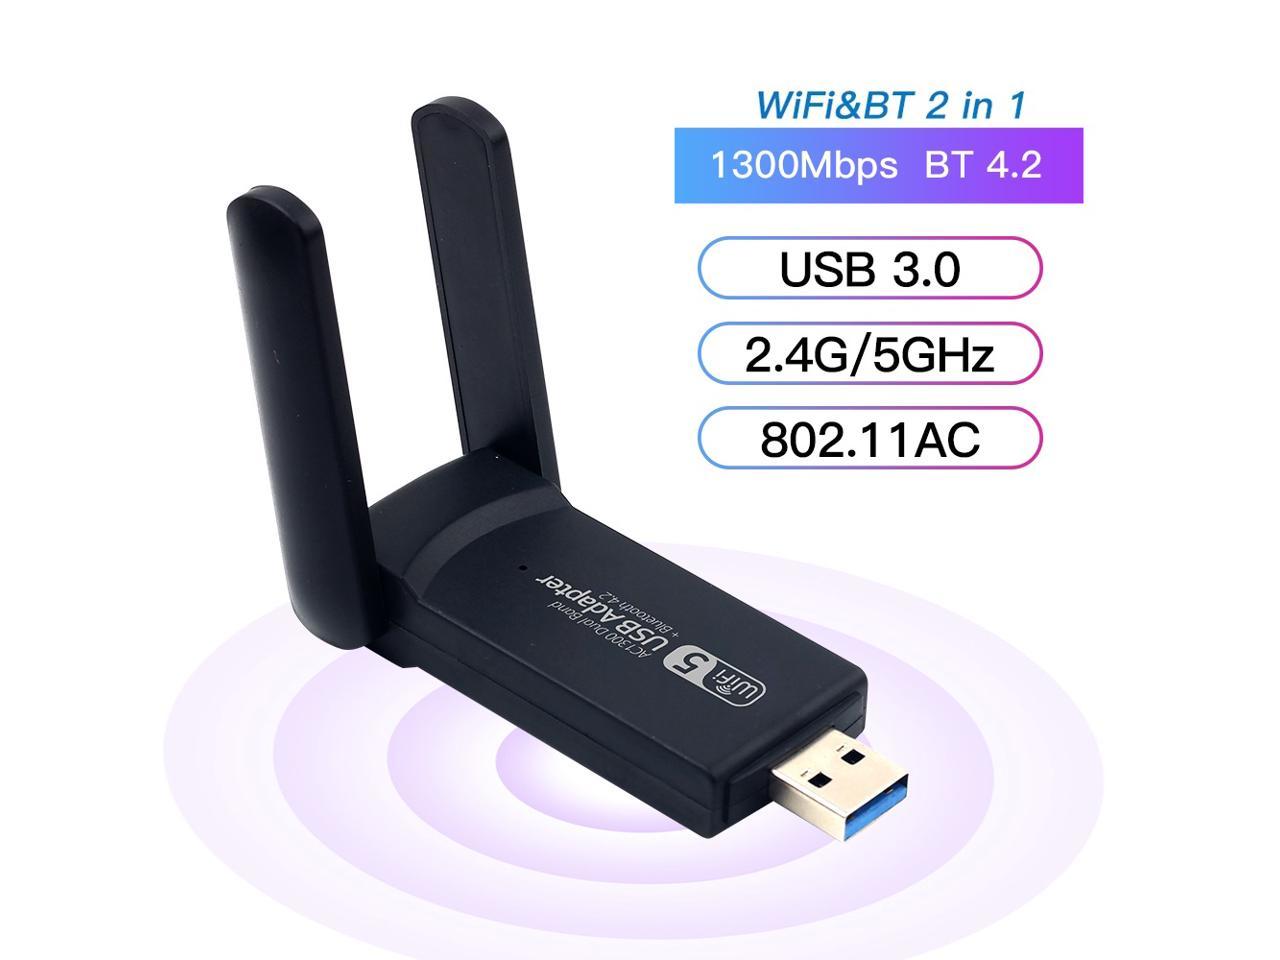 Slovenië Vermeend eetlust DERAPID AC1300 USB WiFi Bluetooth Adapter 1300Mbps Dual Band 2.4Ghz/5Ghz  Wireless Network External Receiver Mini USB 3.0 WiFi Card for  PC/Laptop/Desktop Compatible with Windows 7/8/10 - Newegg.com